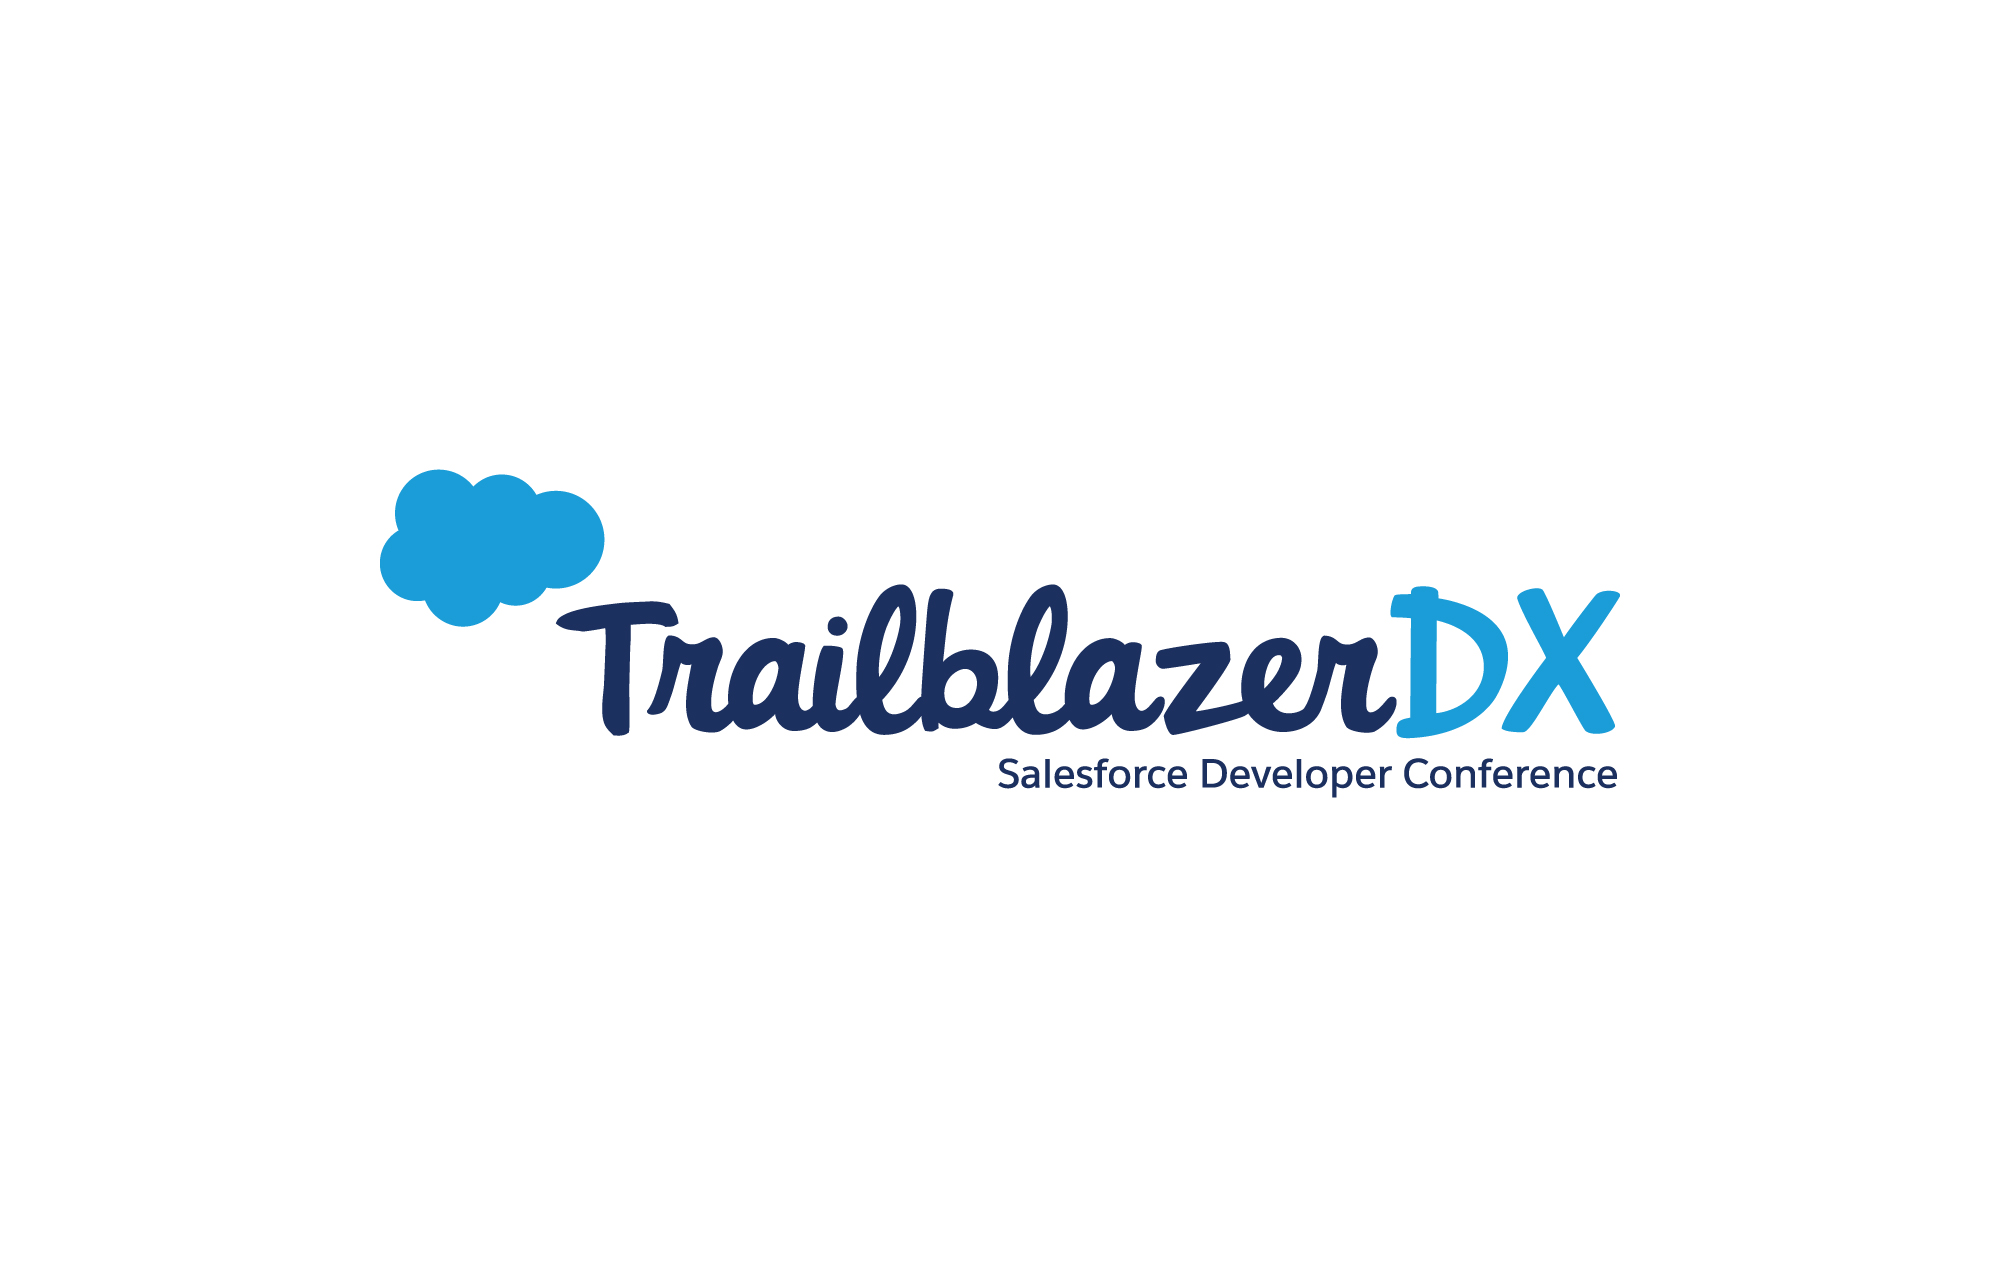 The TrailblazerDX logo on a field of white.